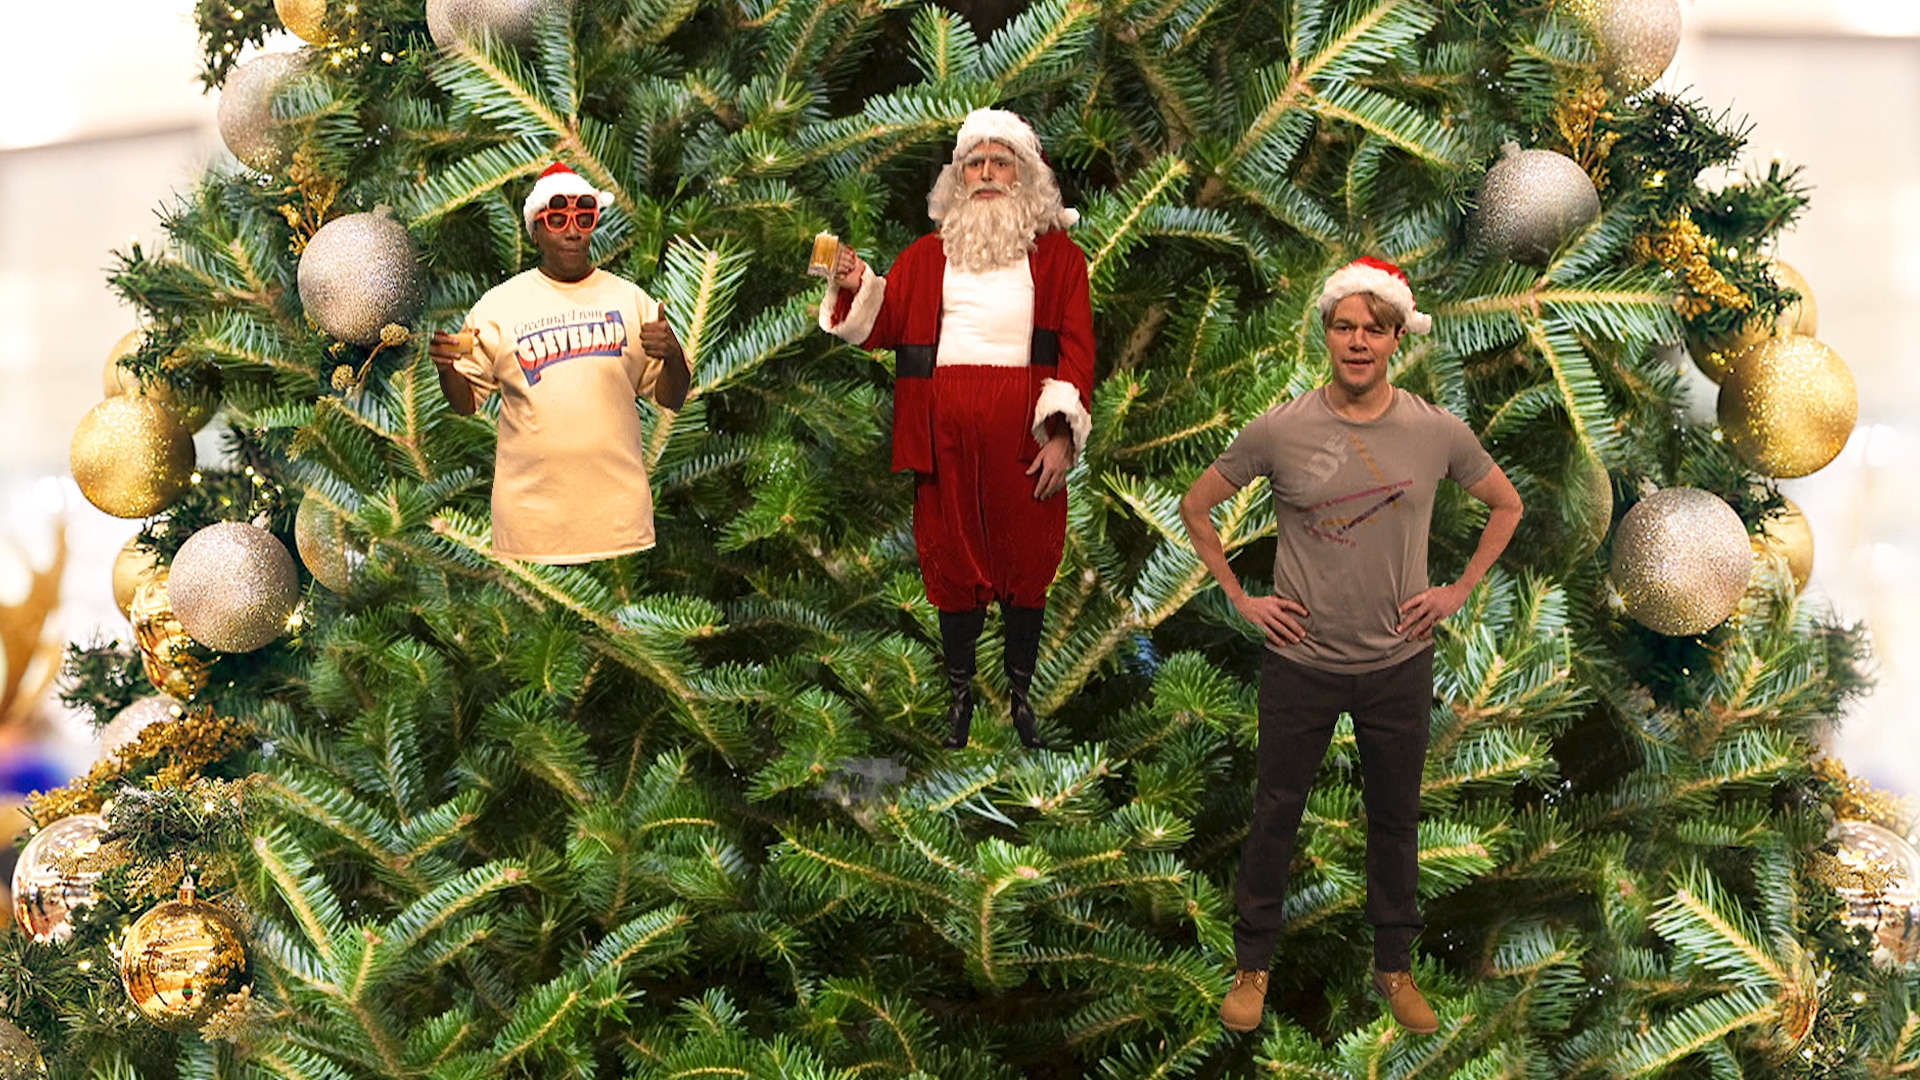 Watch Saturday Night Live Highlight: Christmas Ornaments - NBC.com